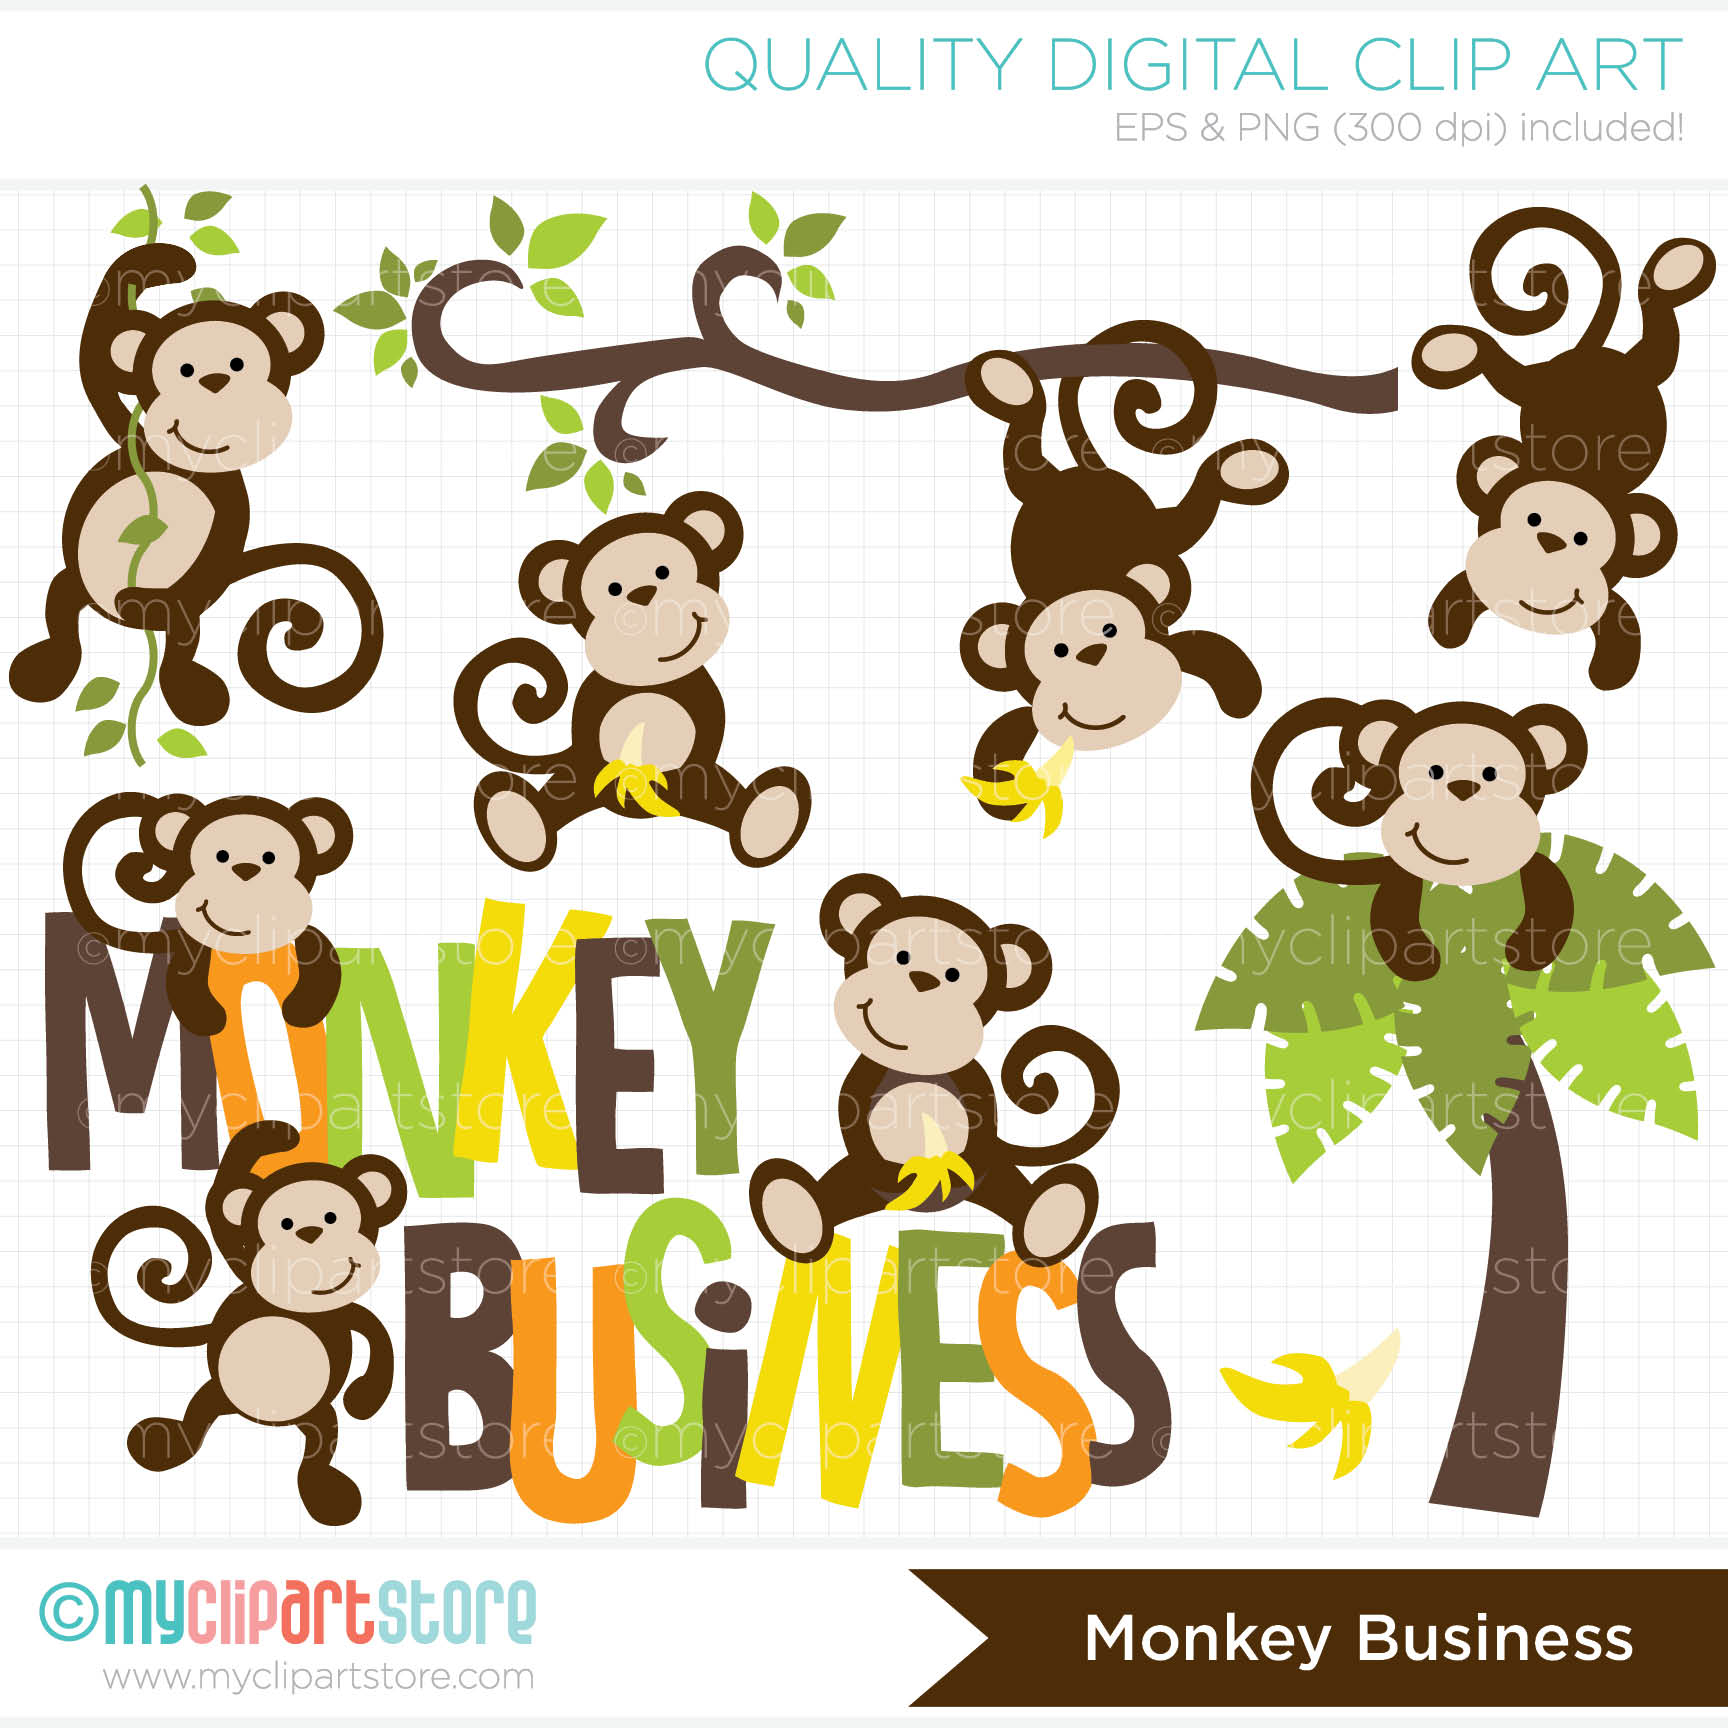 Cute Baby Monkey Clip Art Ima